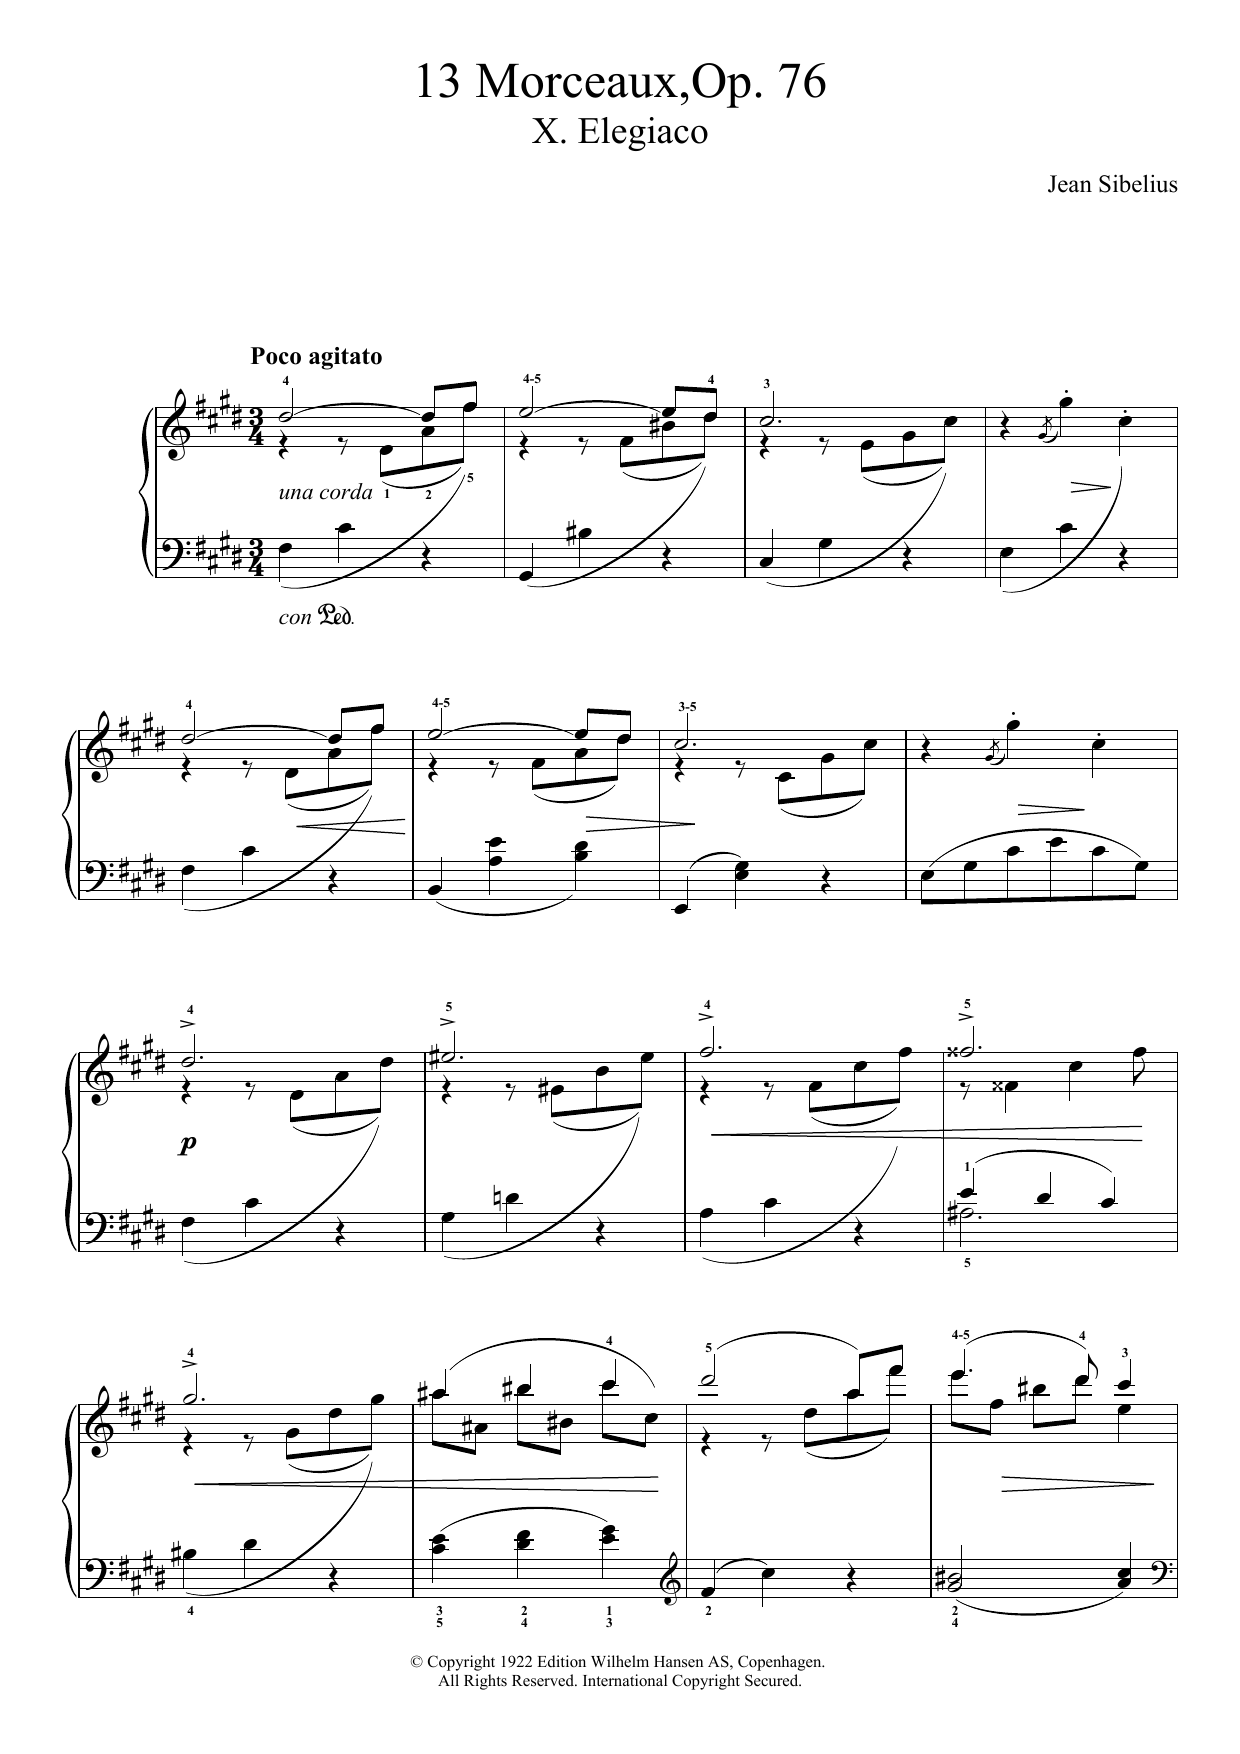 Download Jean Sibelius 13 Morceaux, Op.76 - X. Elegiaco Sheet Music